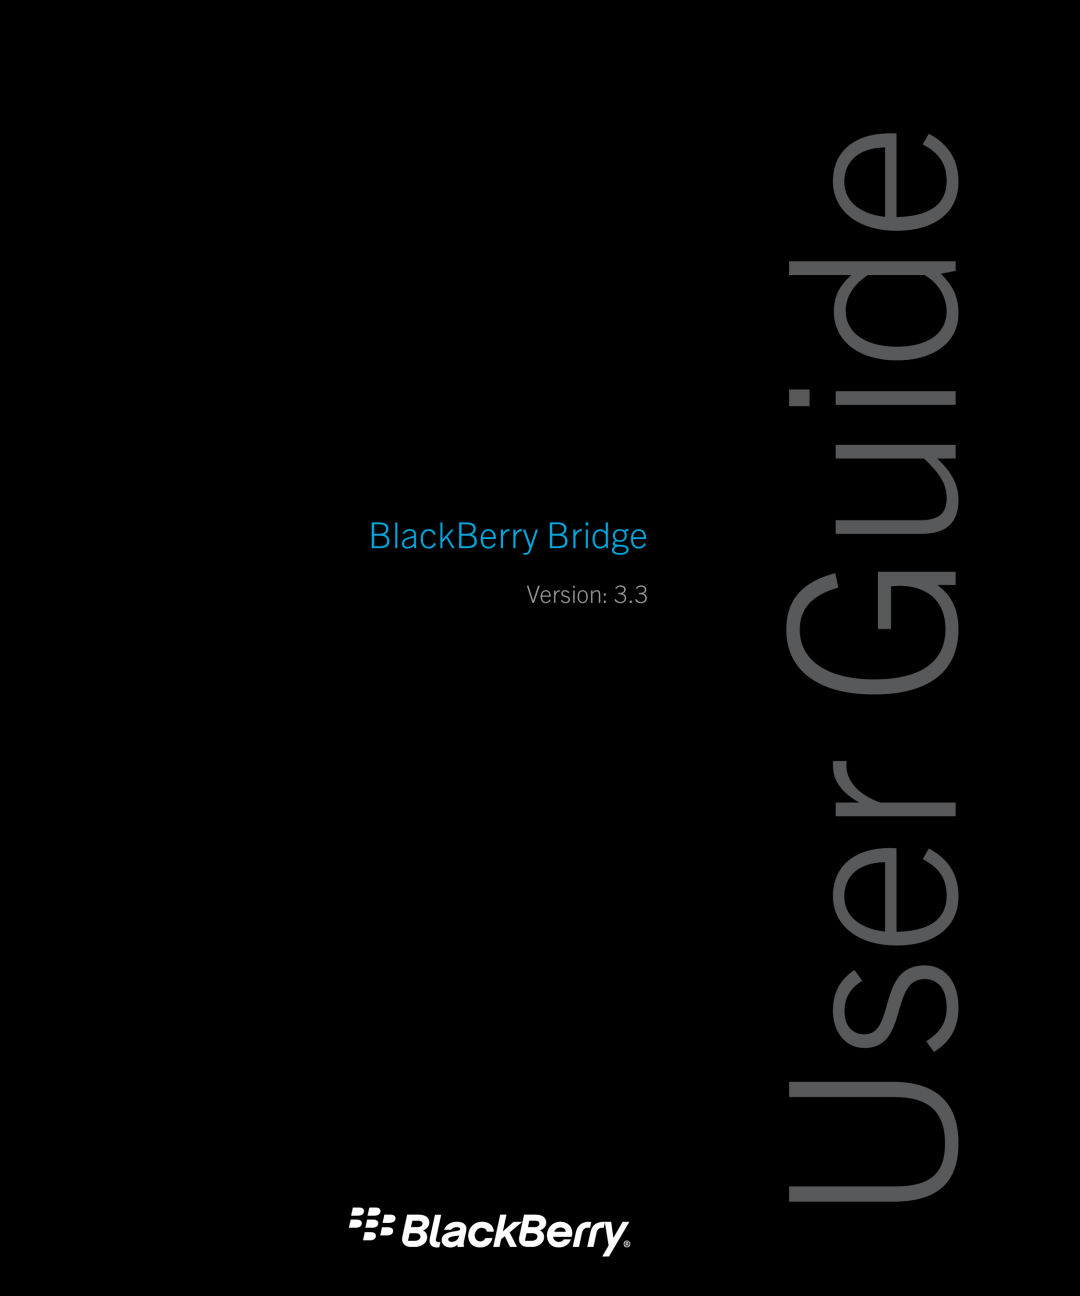 Blackberry 3.3 manual User Guide, BlackBerry Bridge, Version 